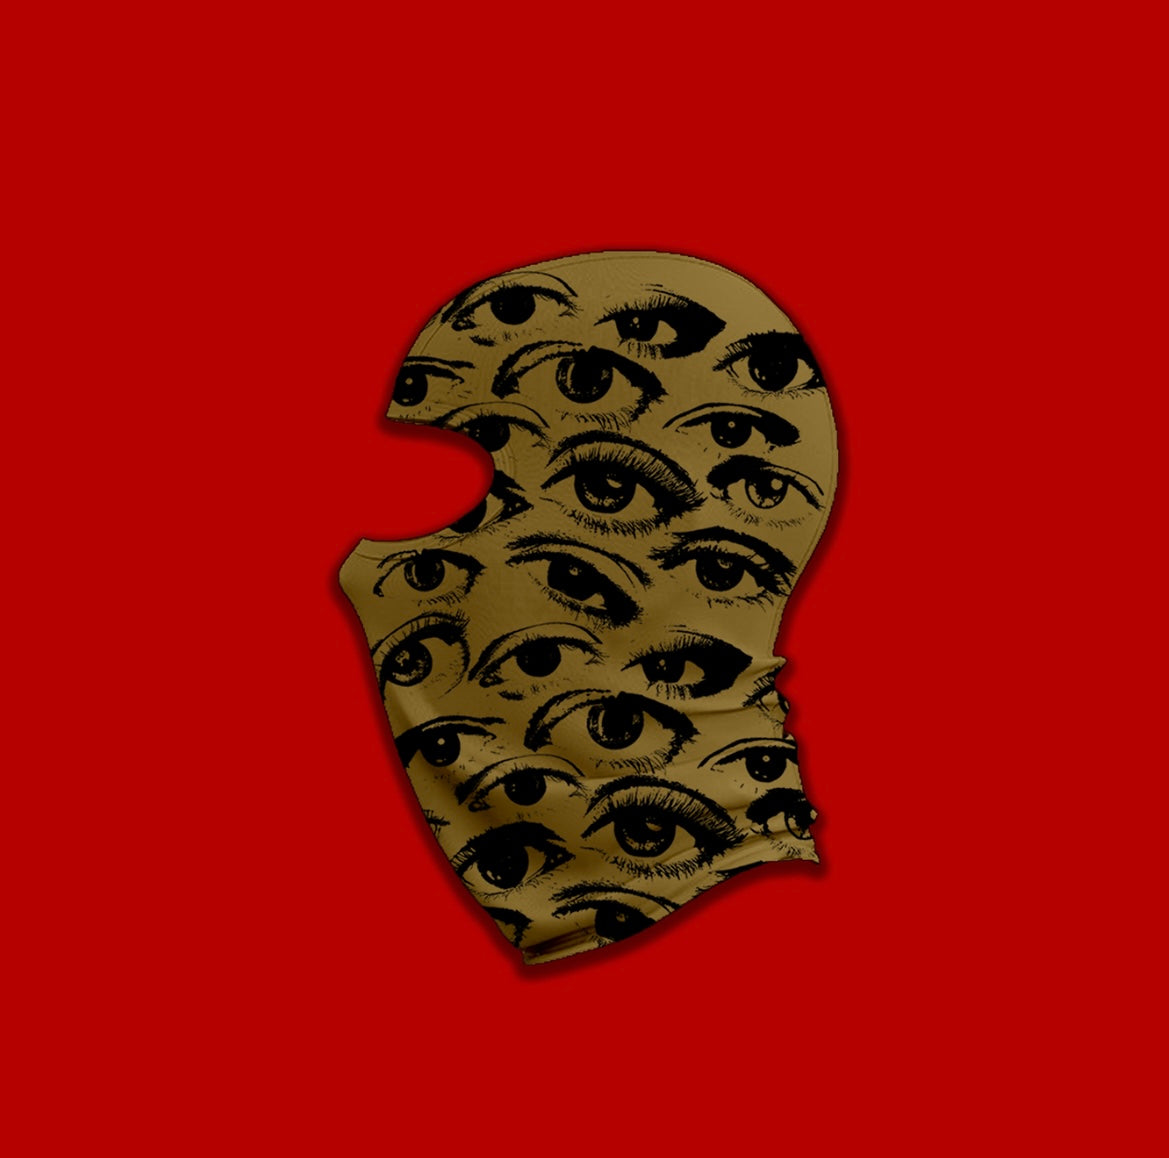 Balaclava mask